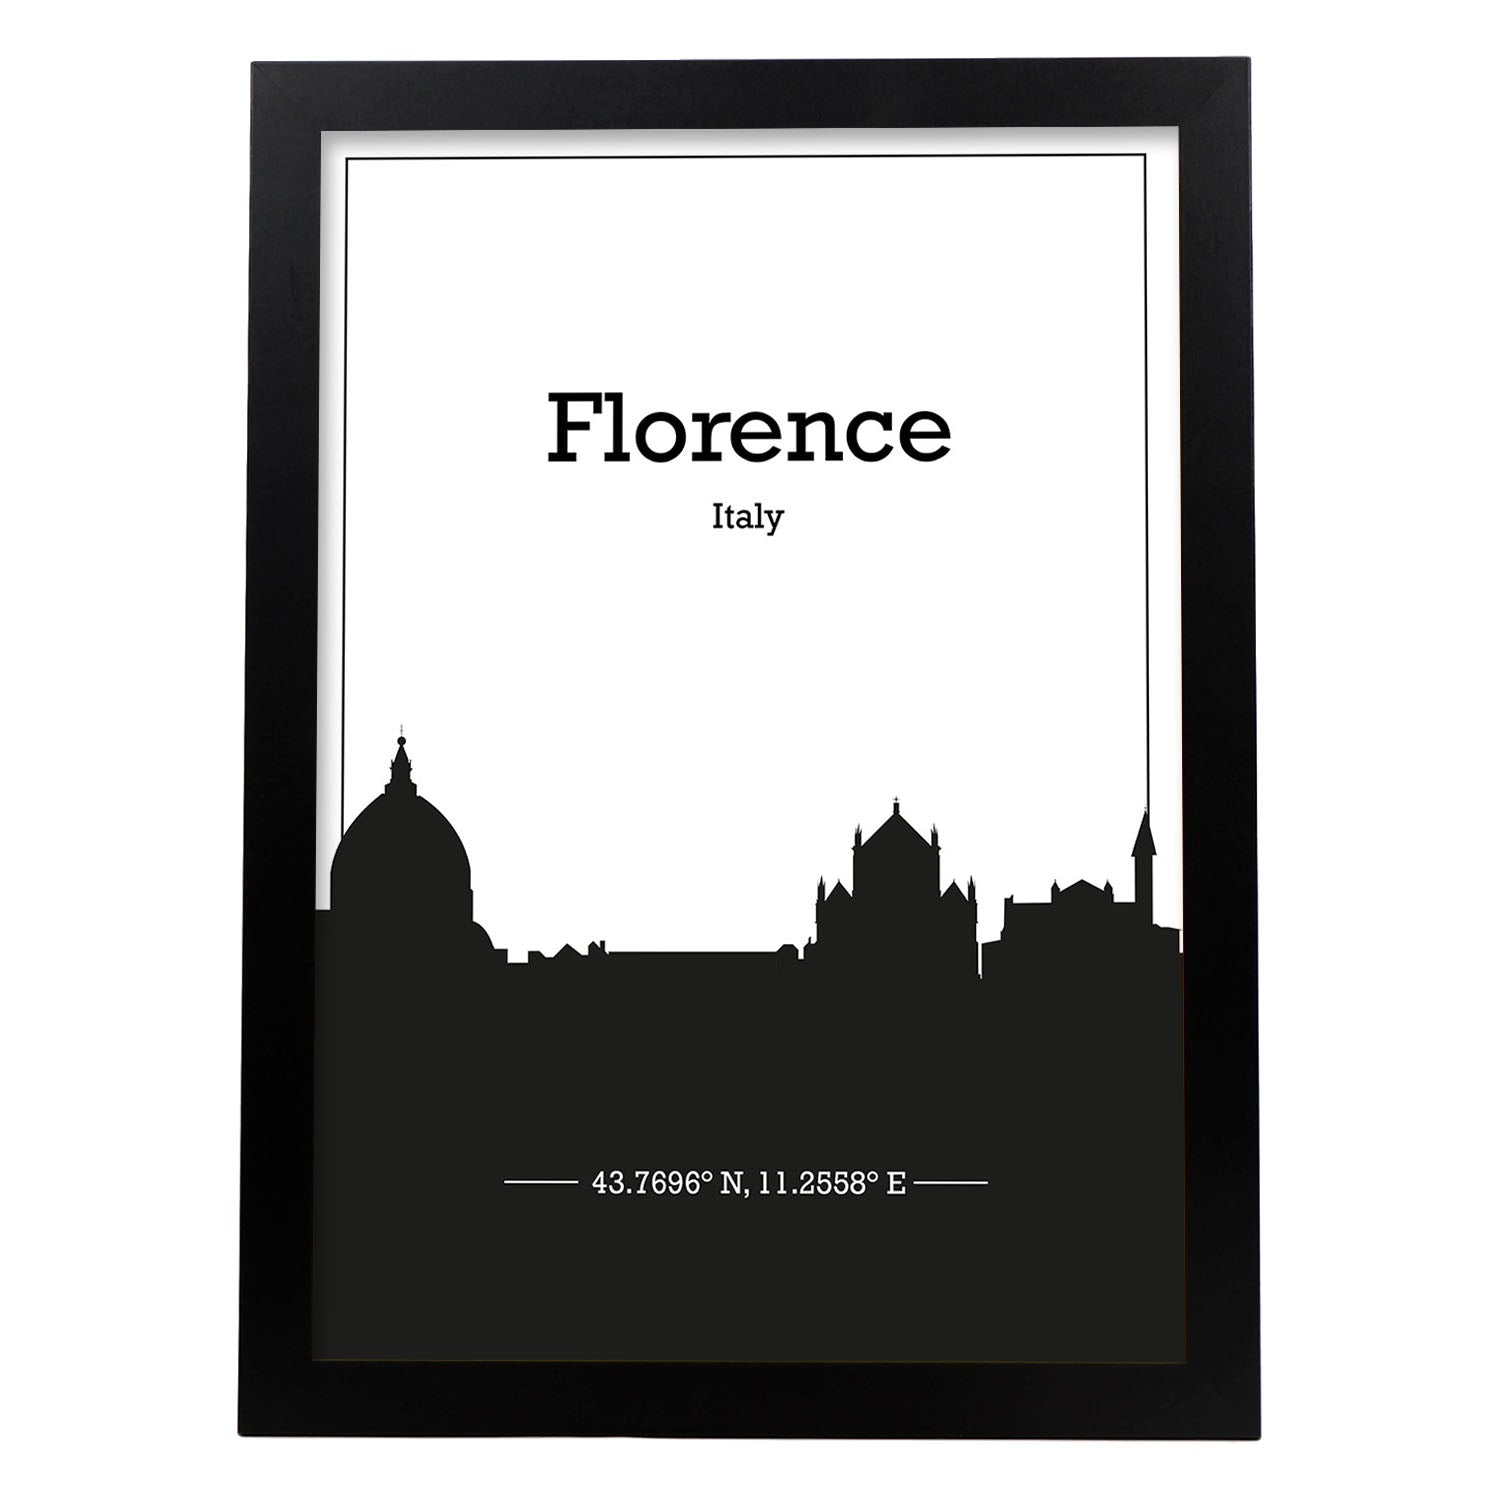 Poster con mapa de Florence - Italia. Láminas con Skyline de ciudades de Italia con sombra negra.-Artwork-Nacnic-A3-Marco Negro-Nacnic Estudio SL